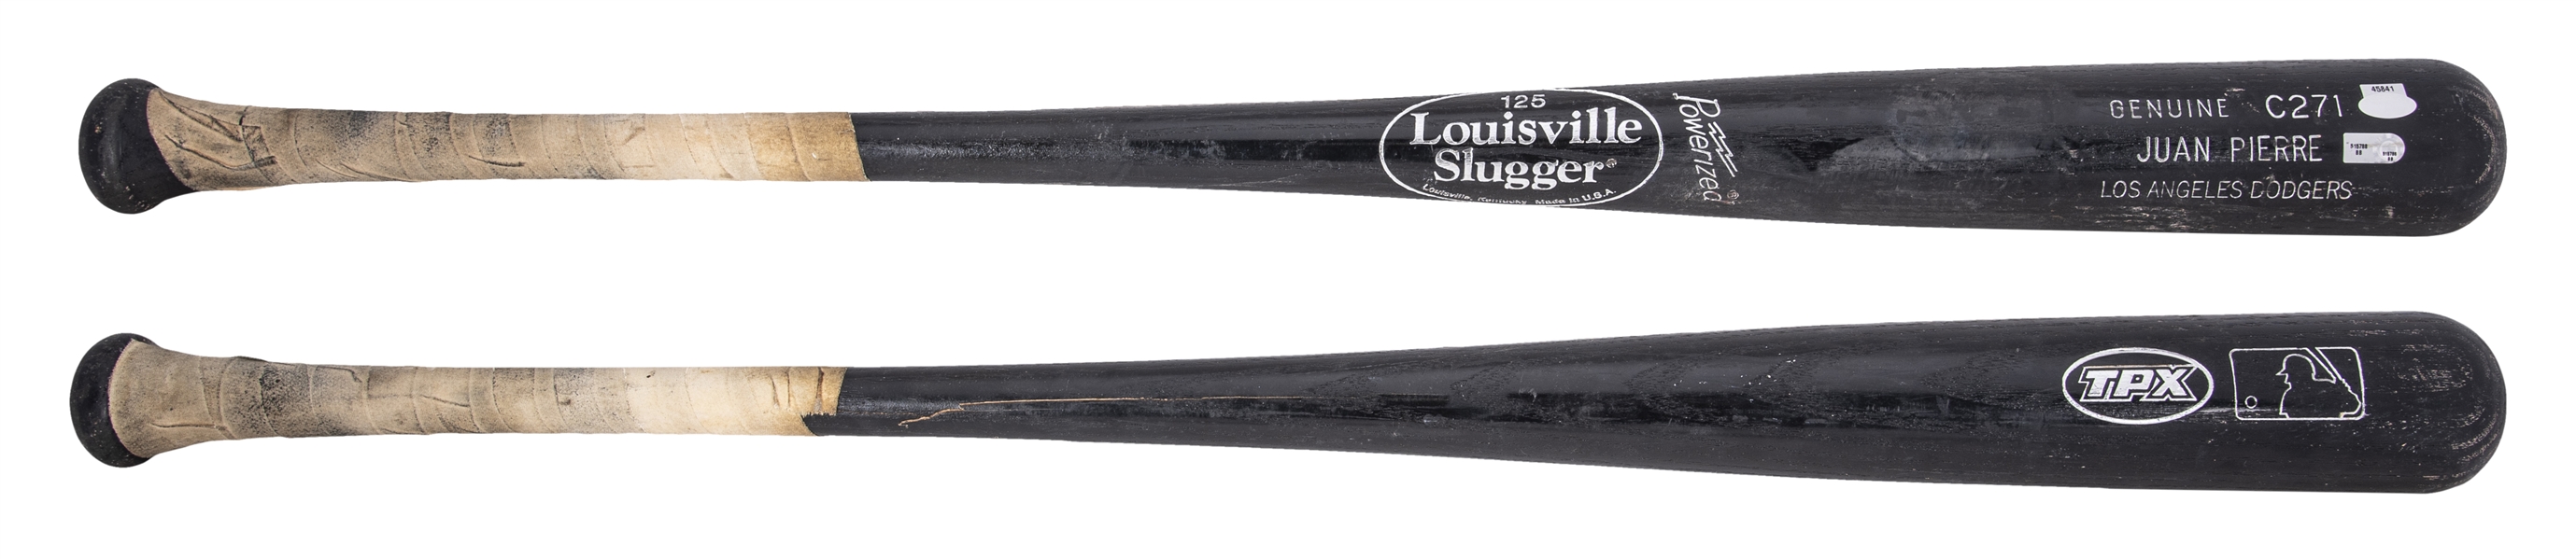 Louisville Slugger Wood Bat 125 Powerized Genuine Model C271 TPX